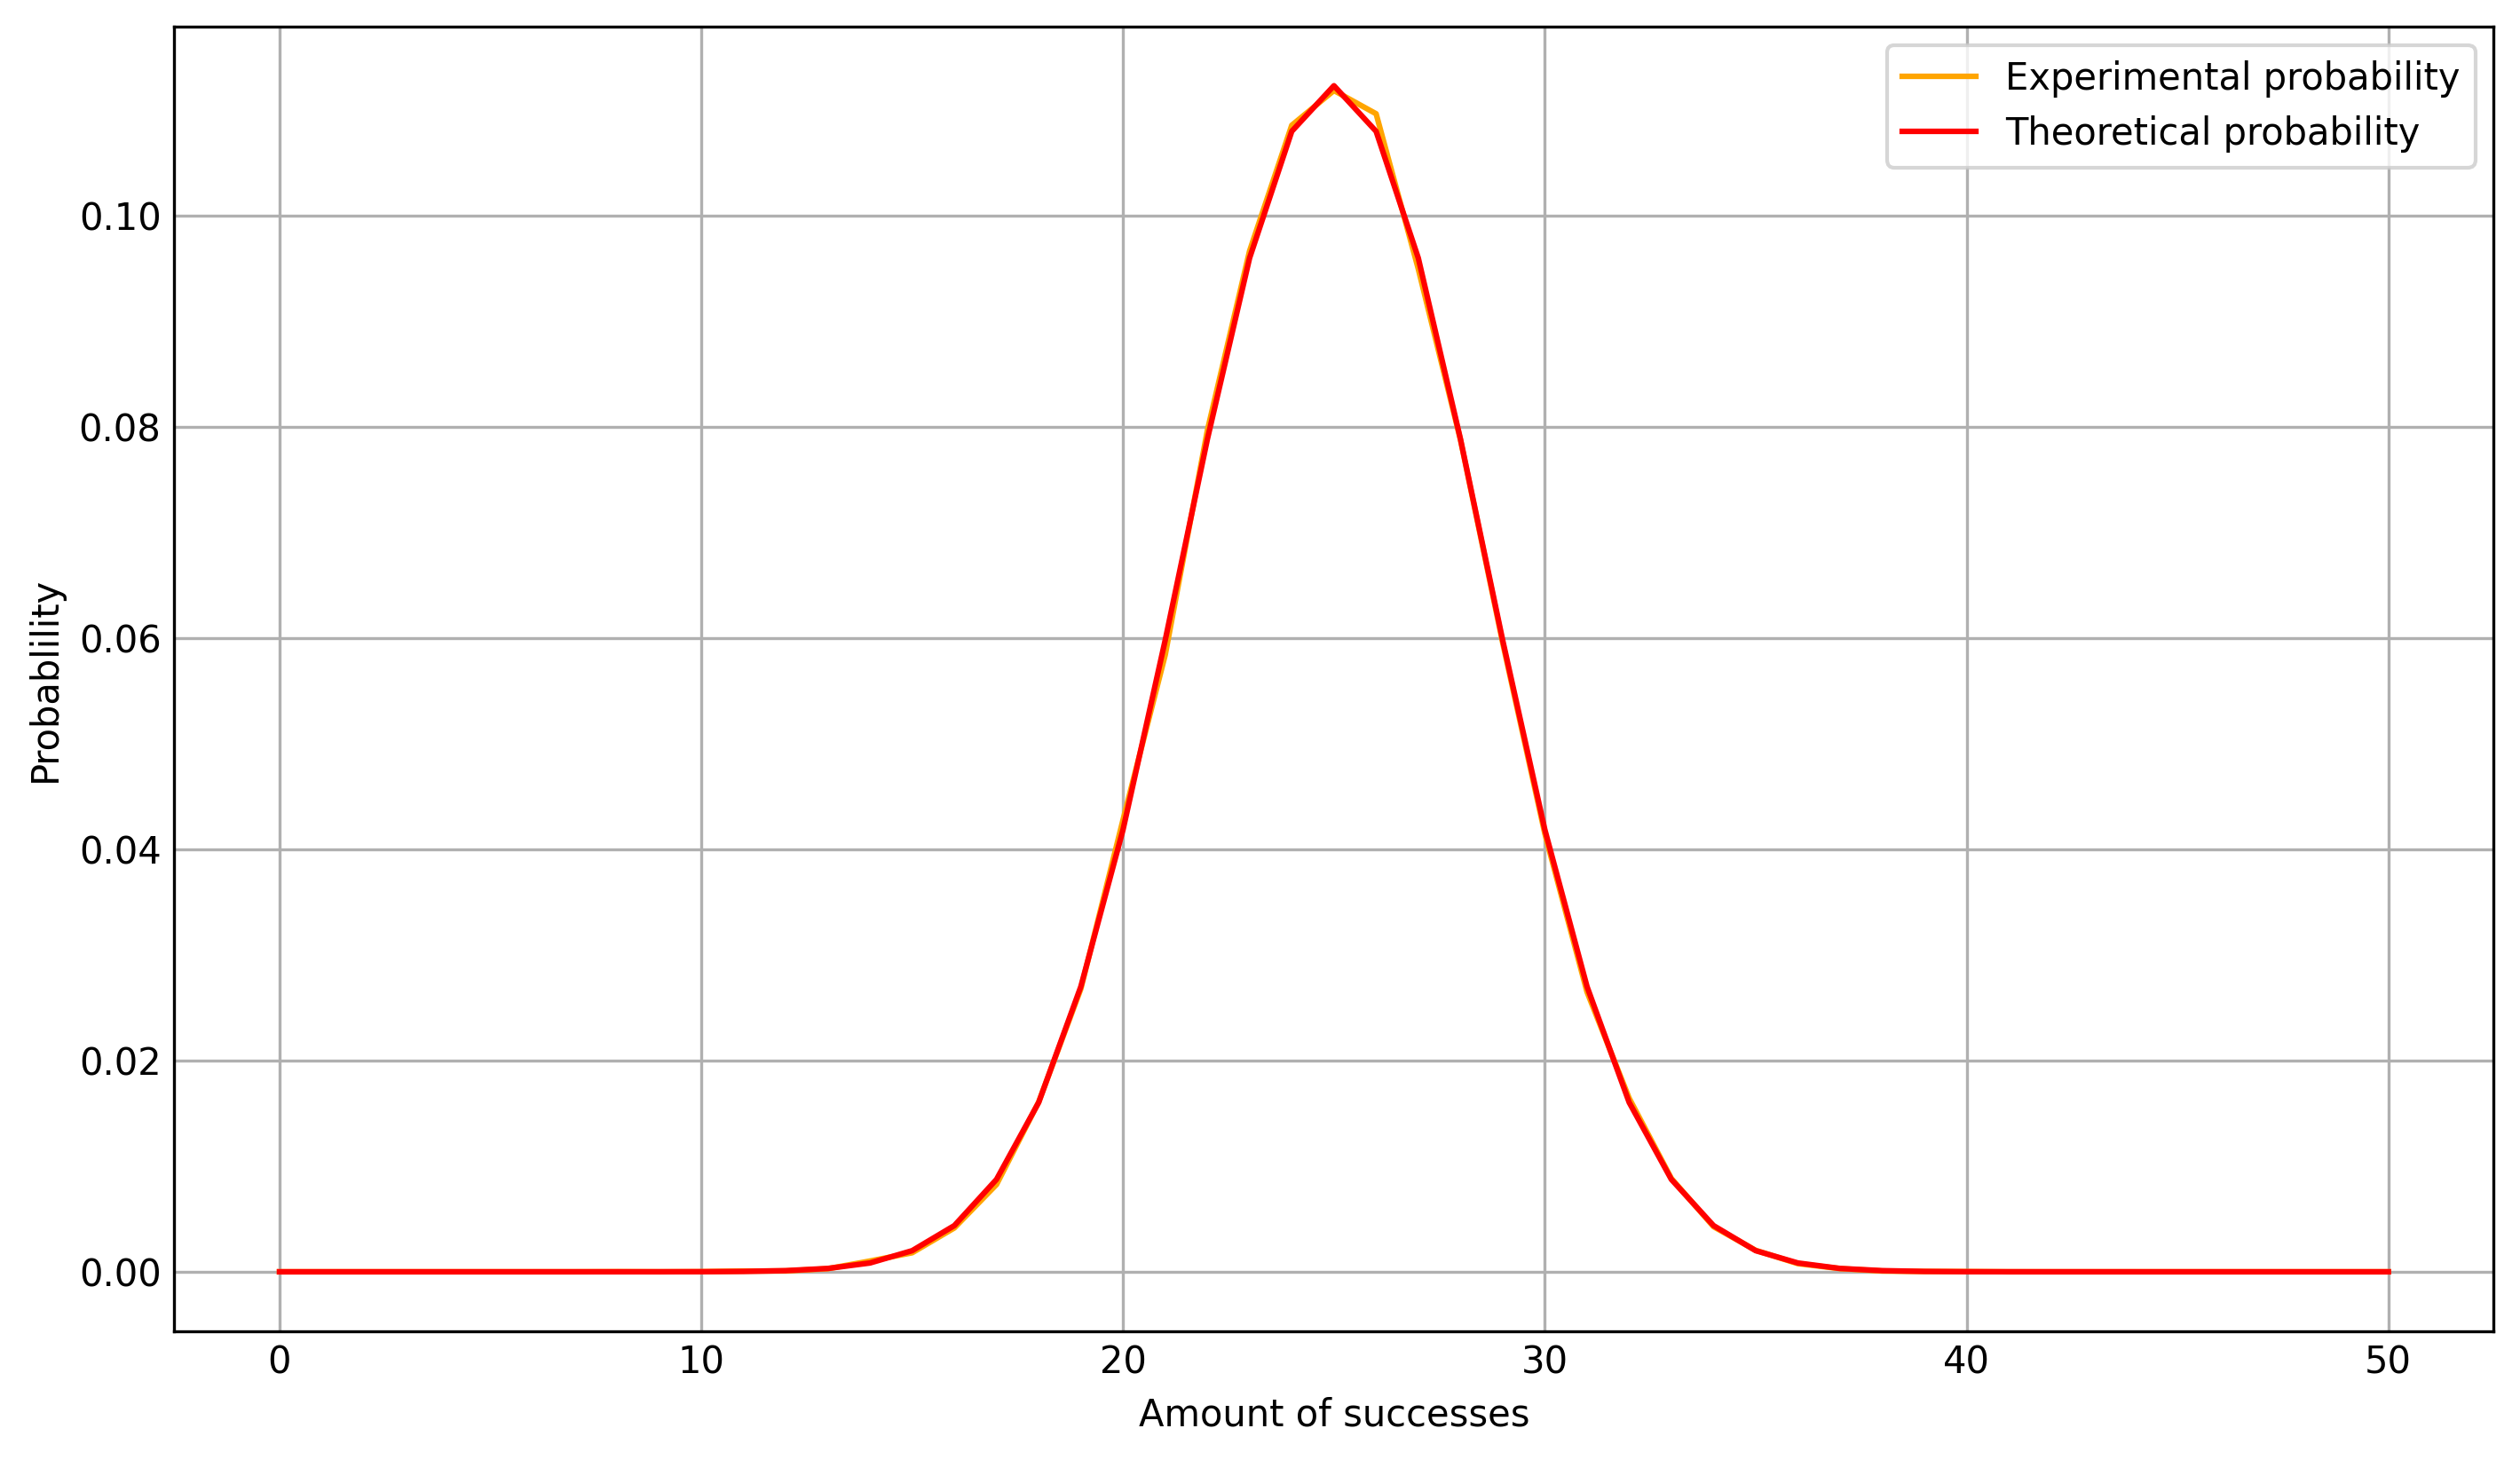 Experimental vs theorteical probability graph exmaple